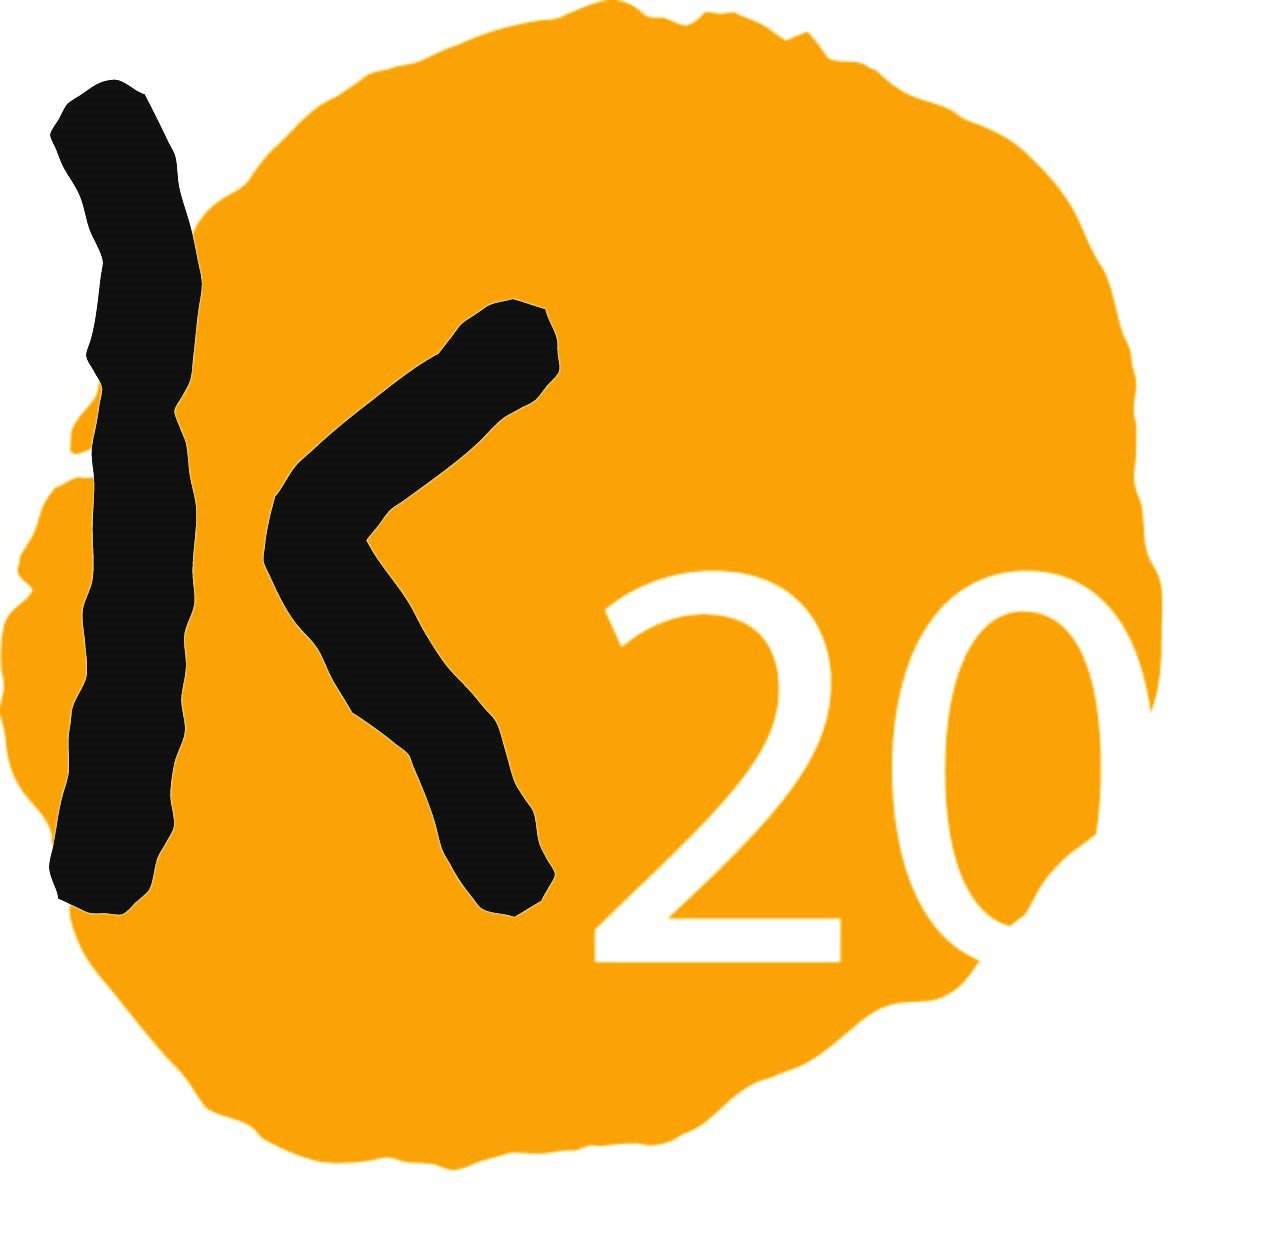 Logo K20